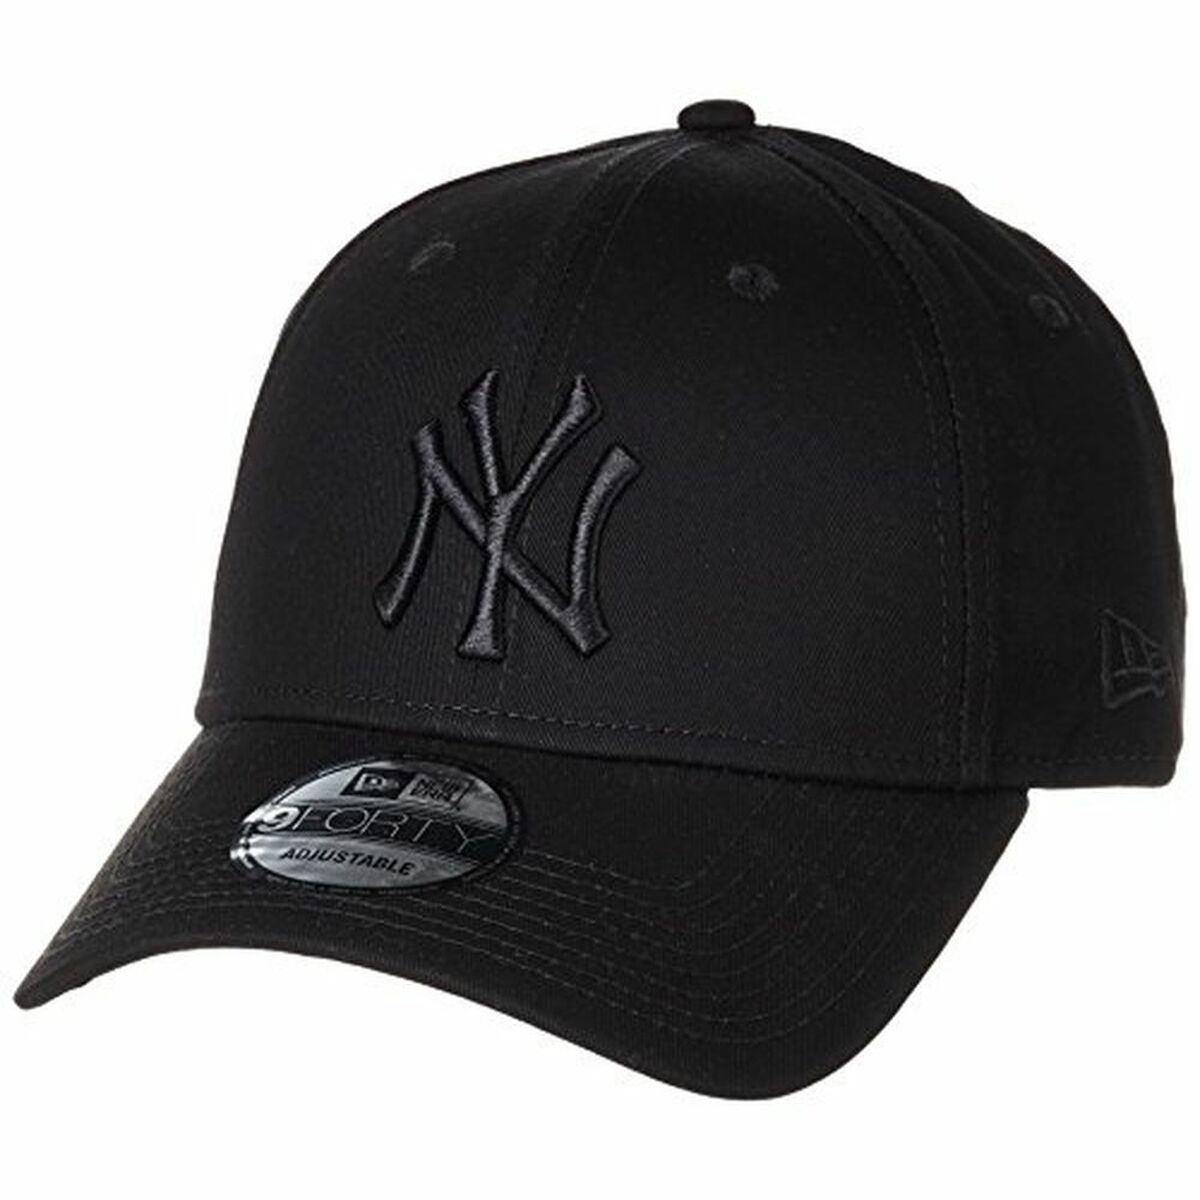 Sports Cap New Era Black (One size)